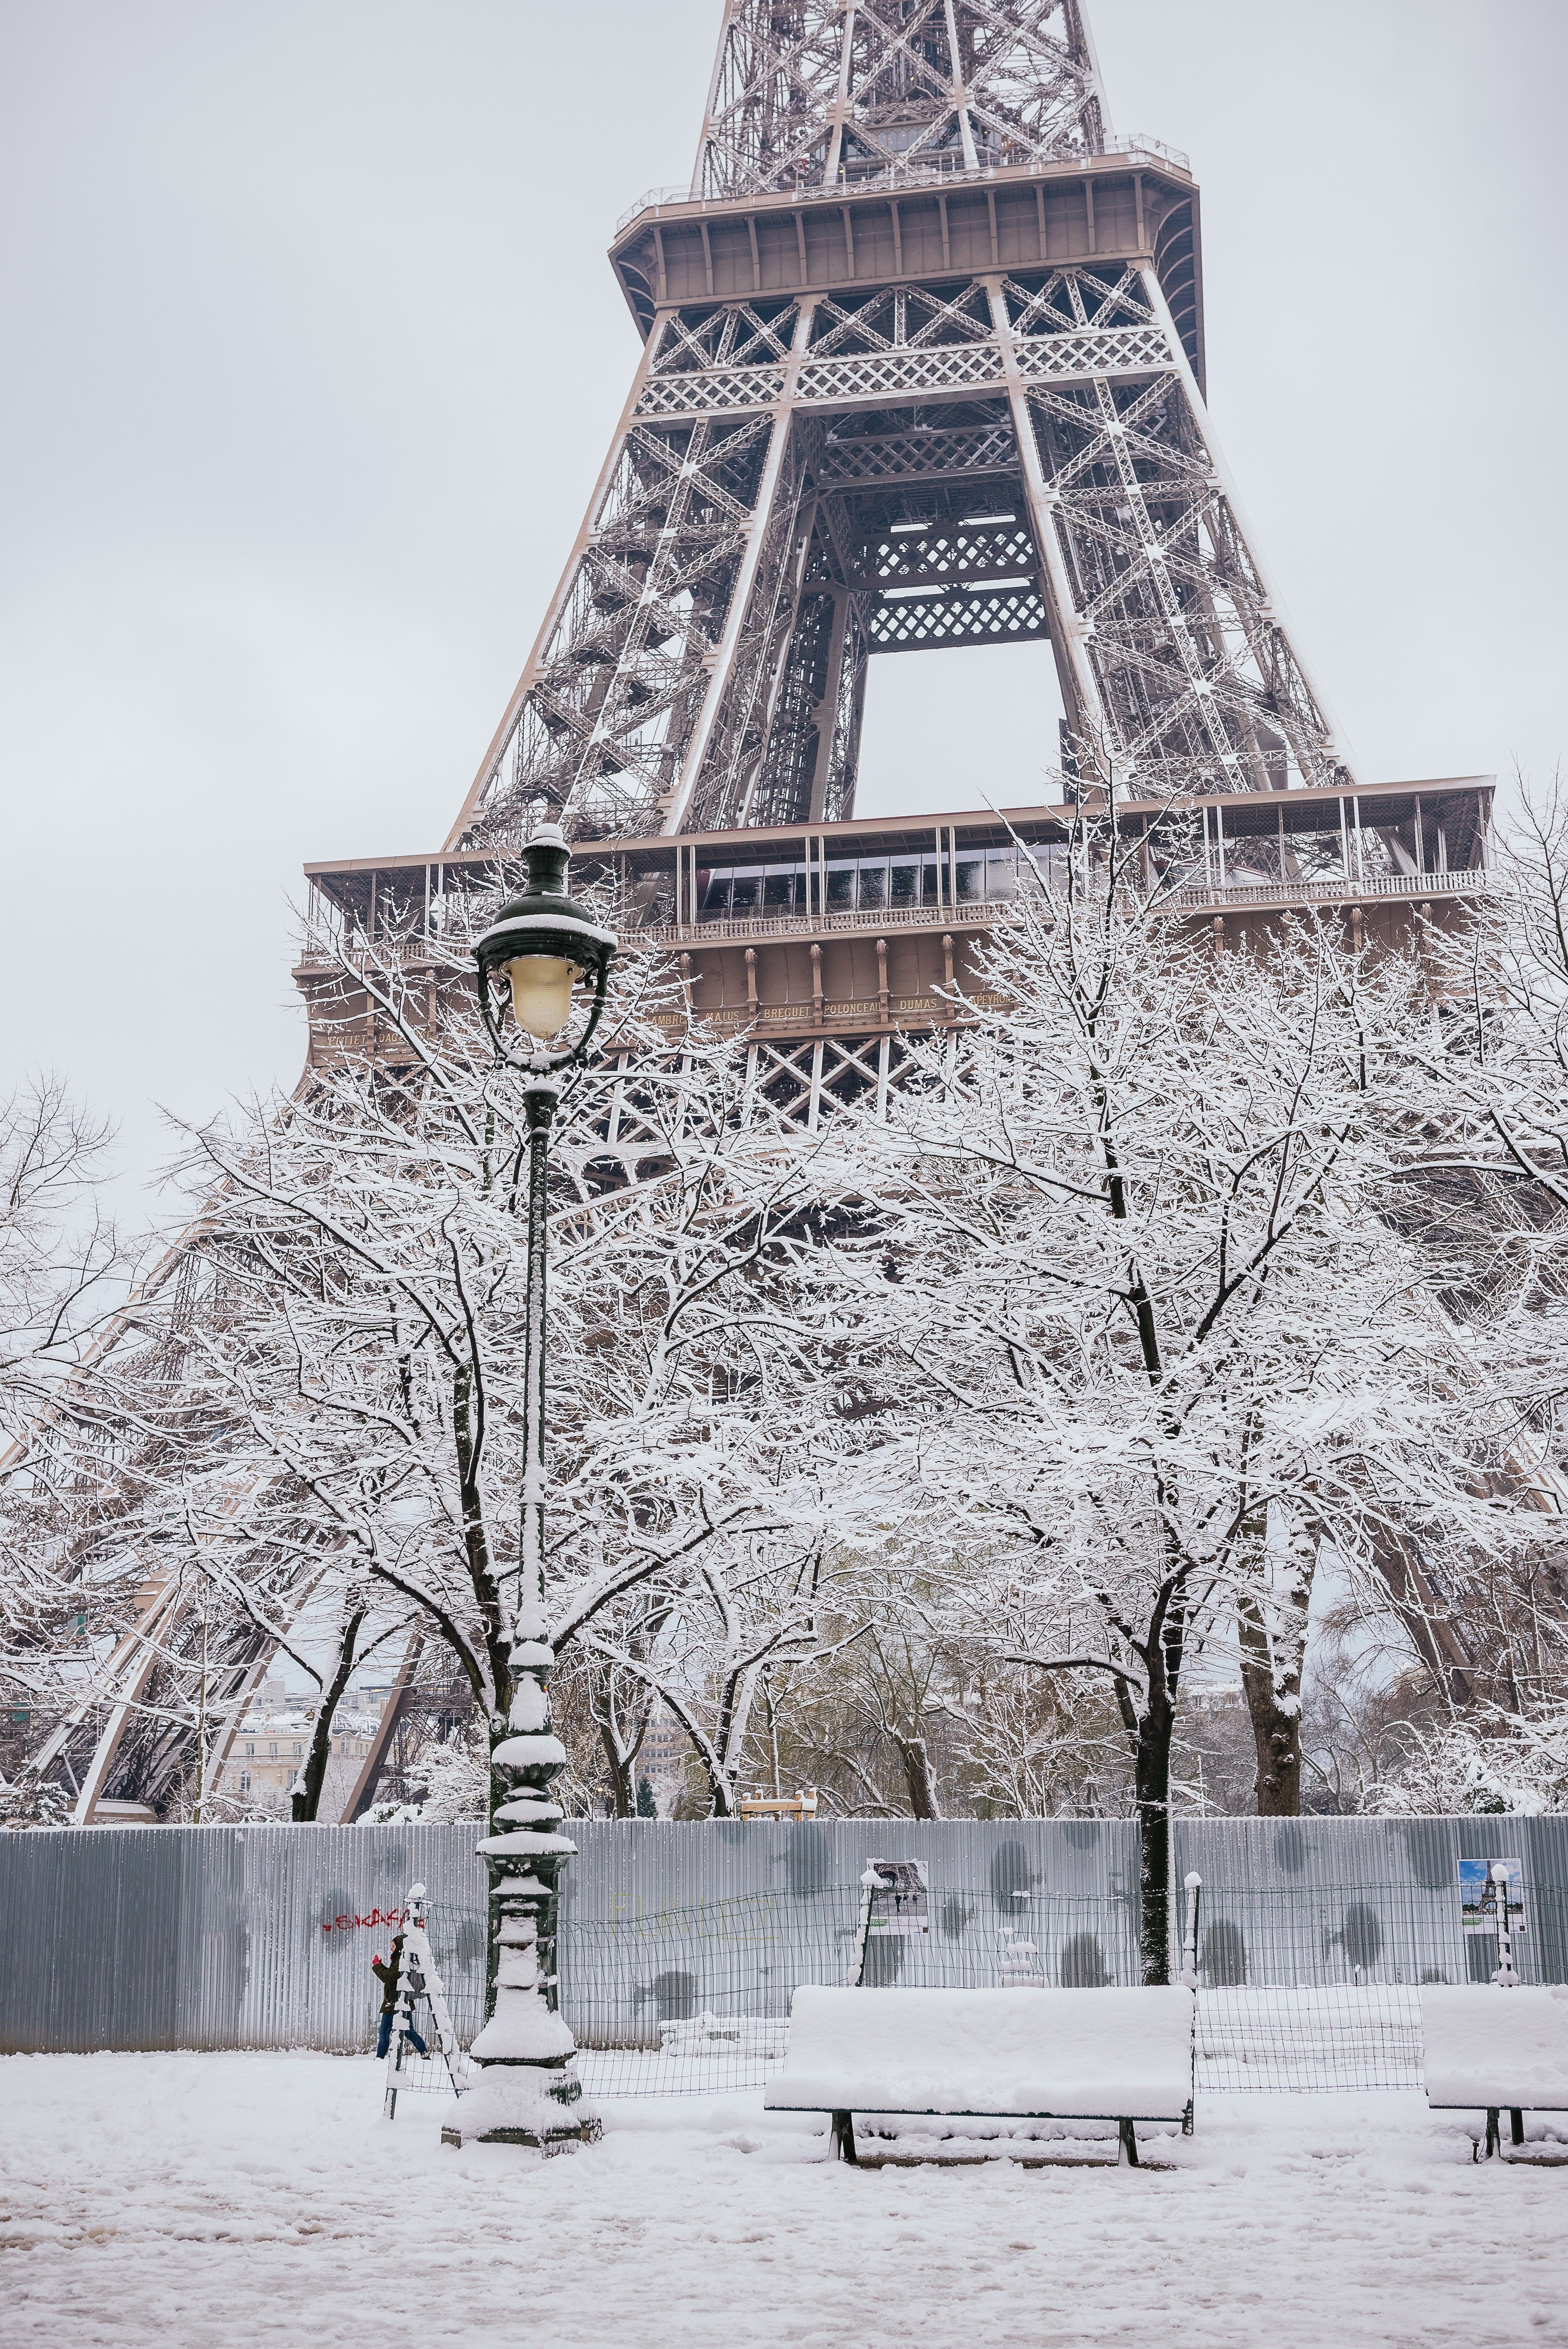 Paris photo portfolio of The Paris Photographer team. Paris photo, Paris snow, Christmas in paris